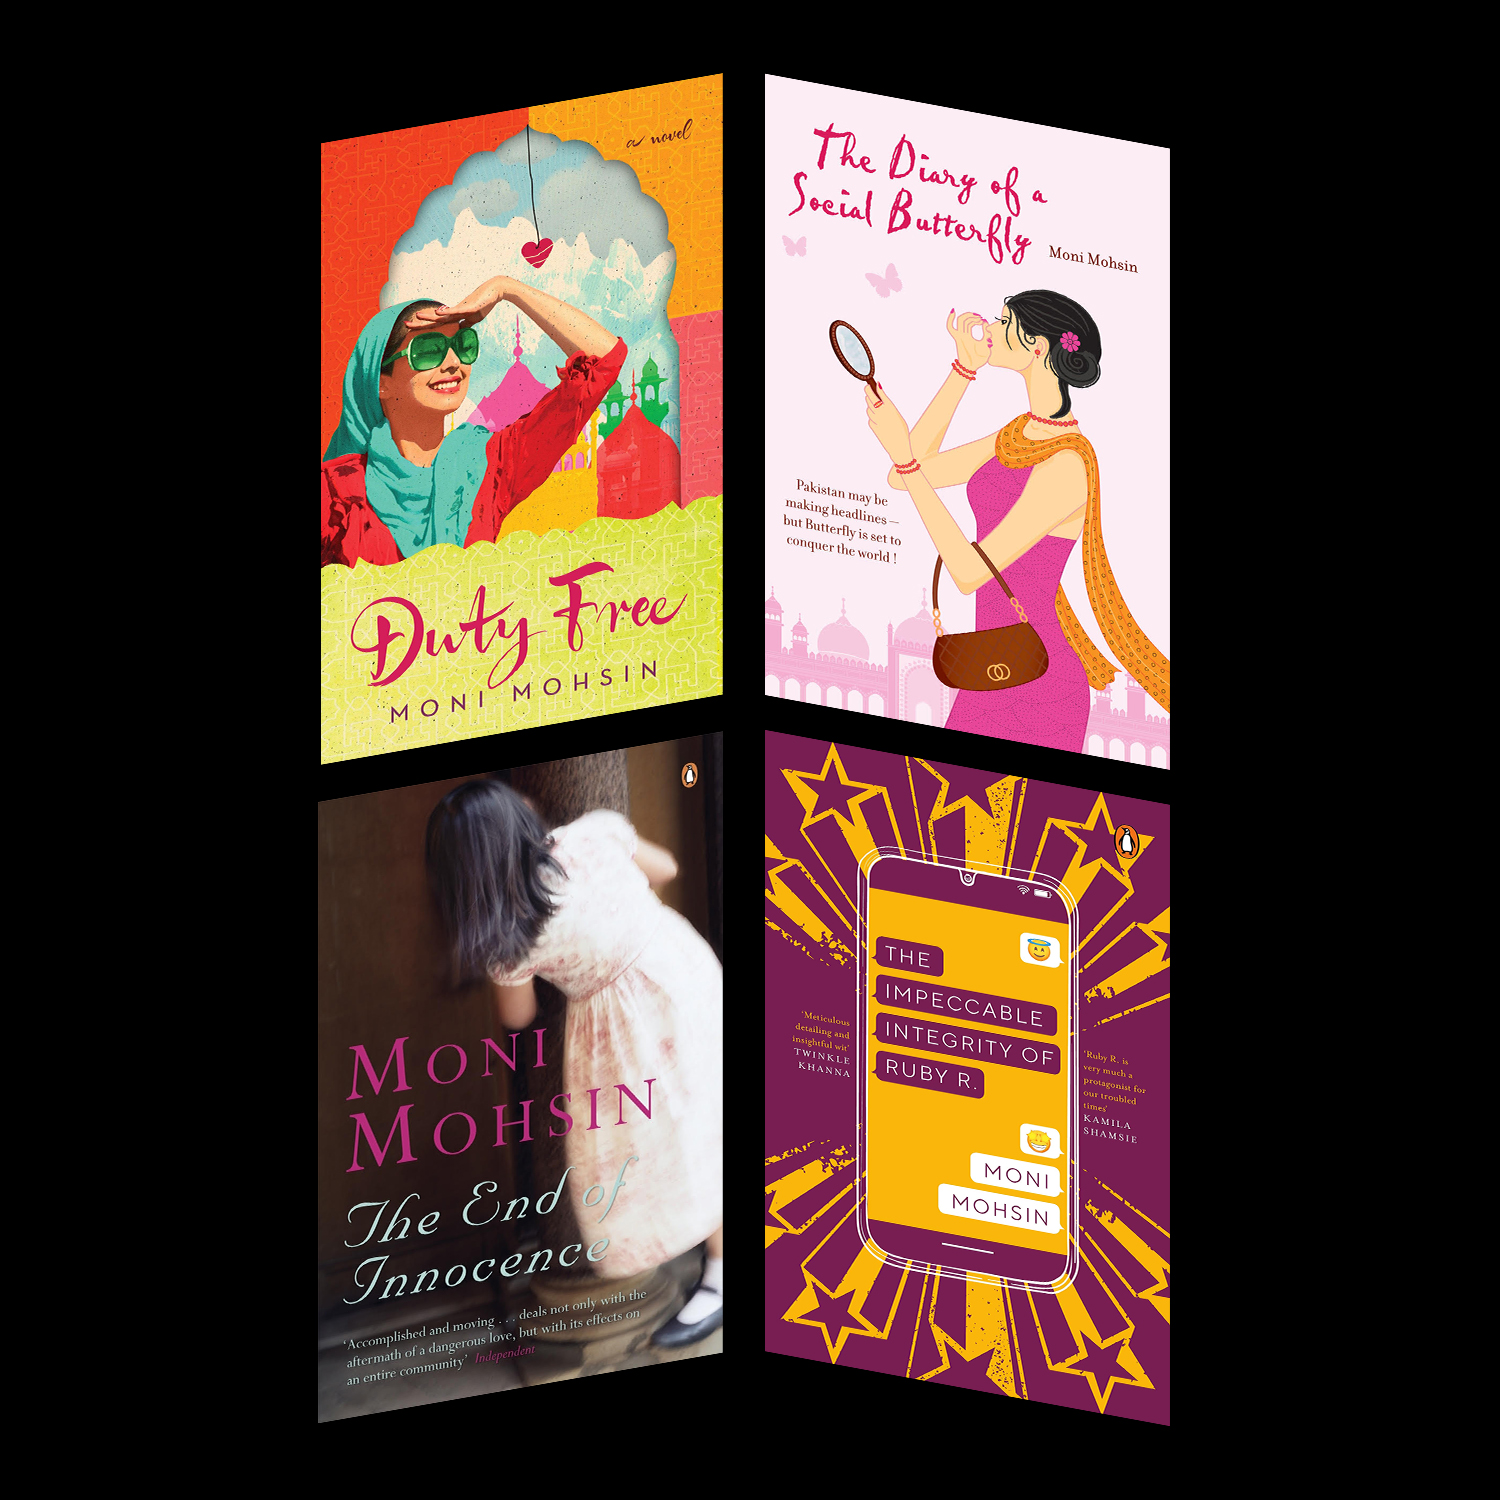 How Moni Mohsin’s novels defy the rigid “chick-lit” label